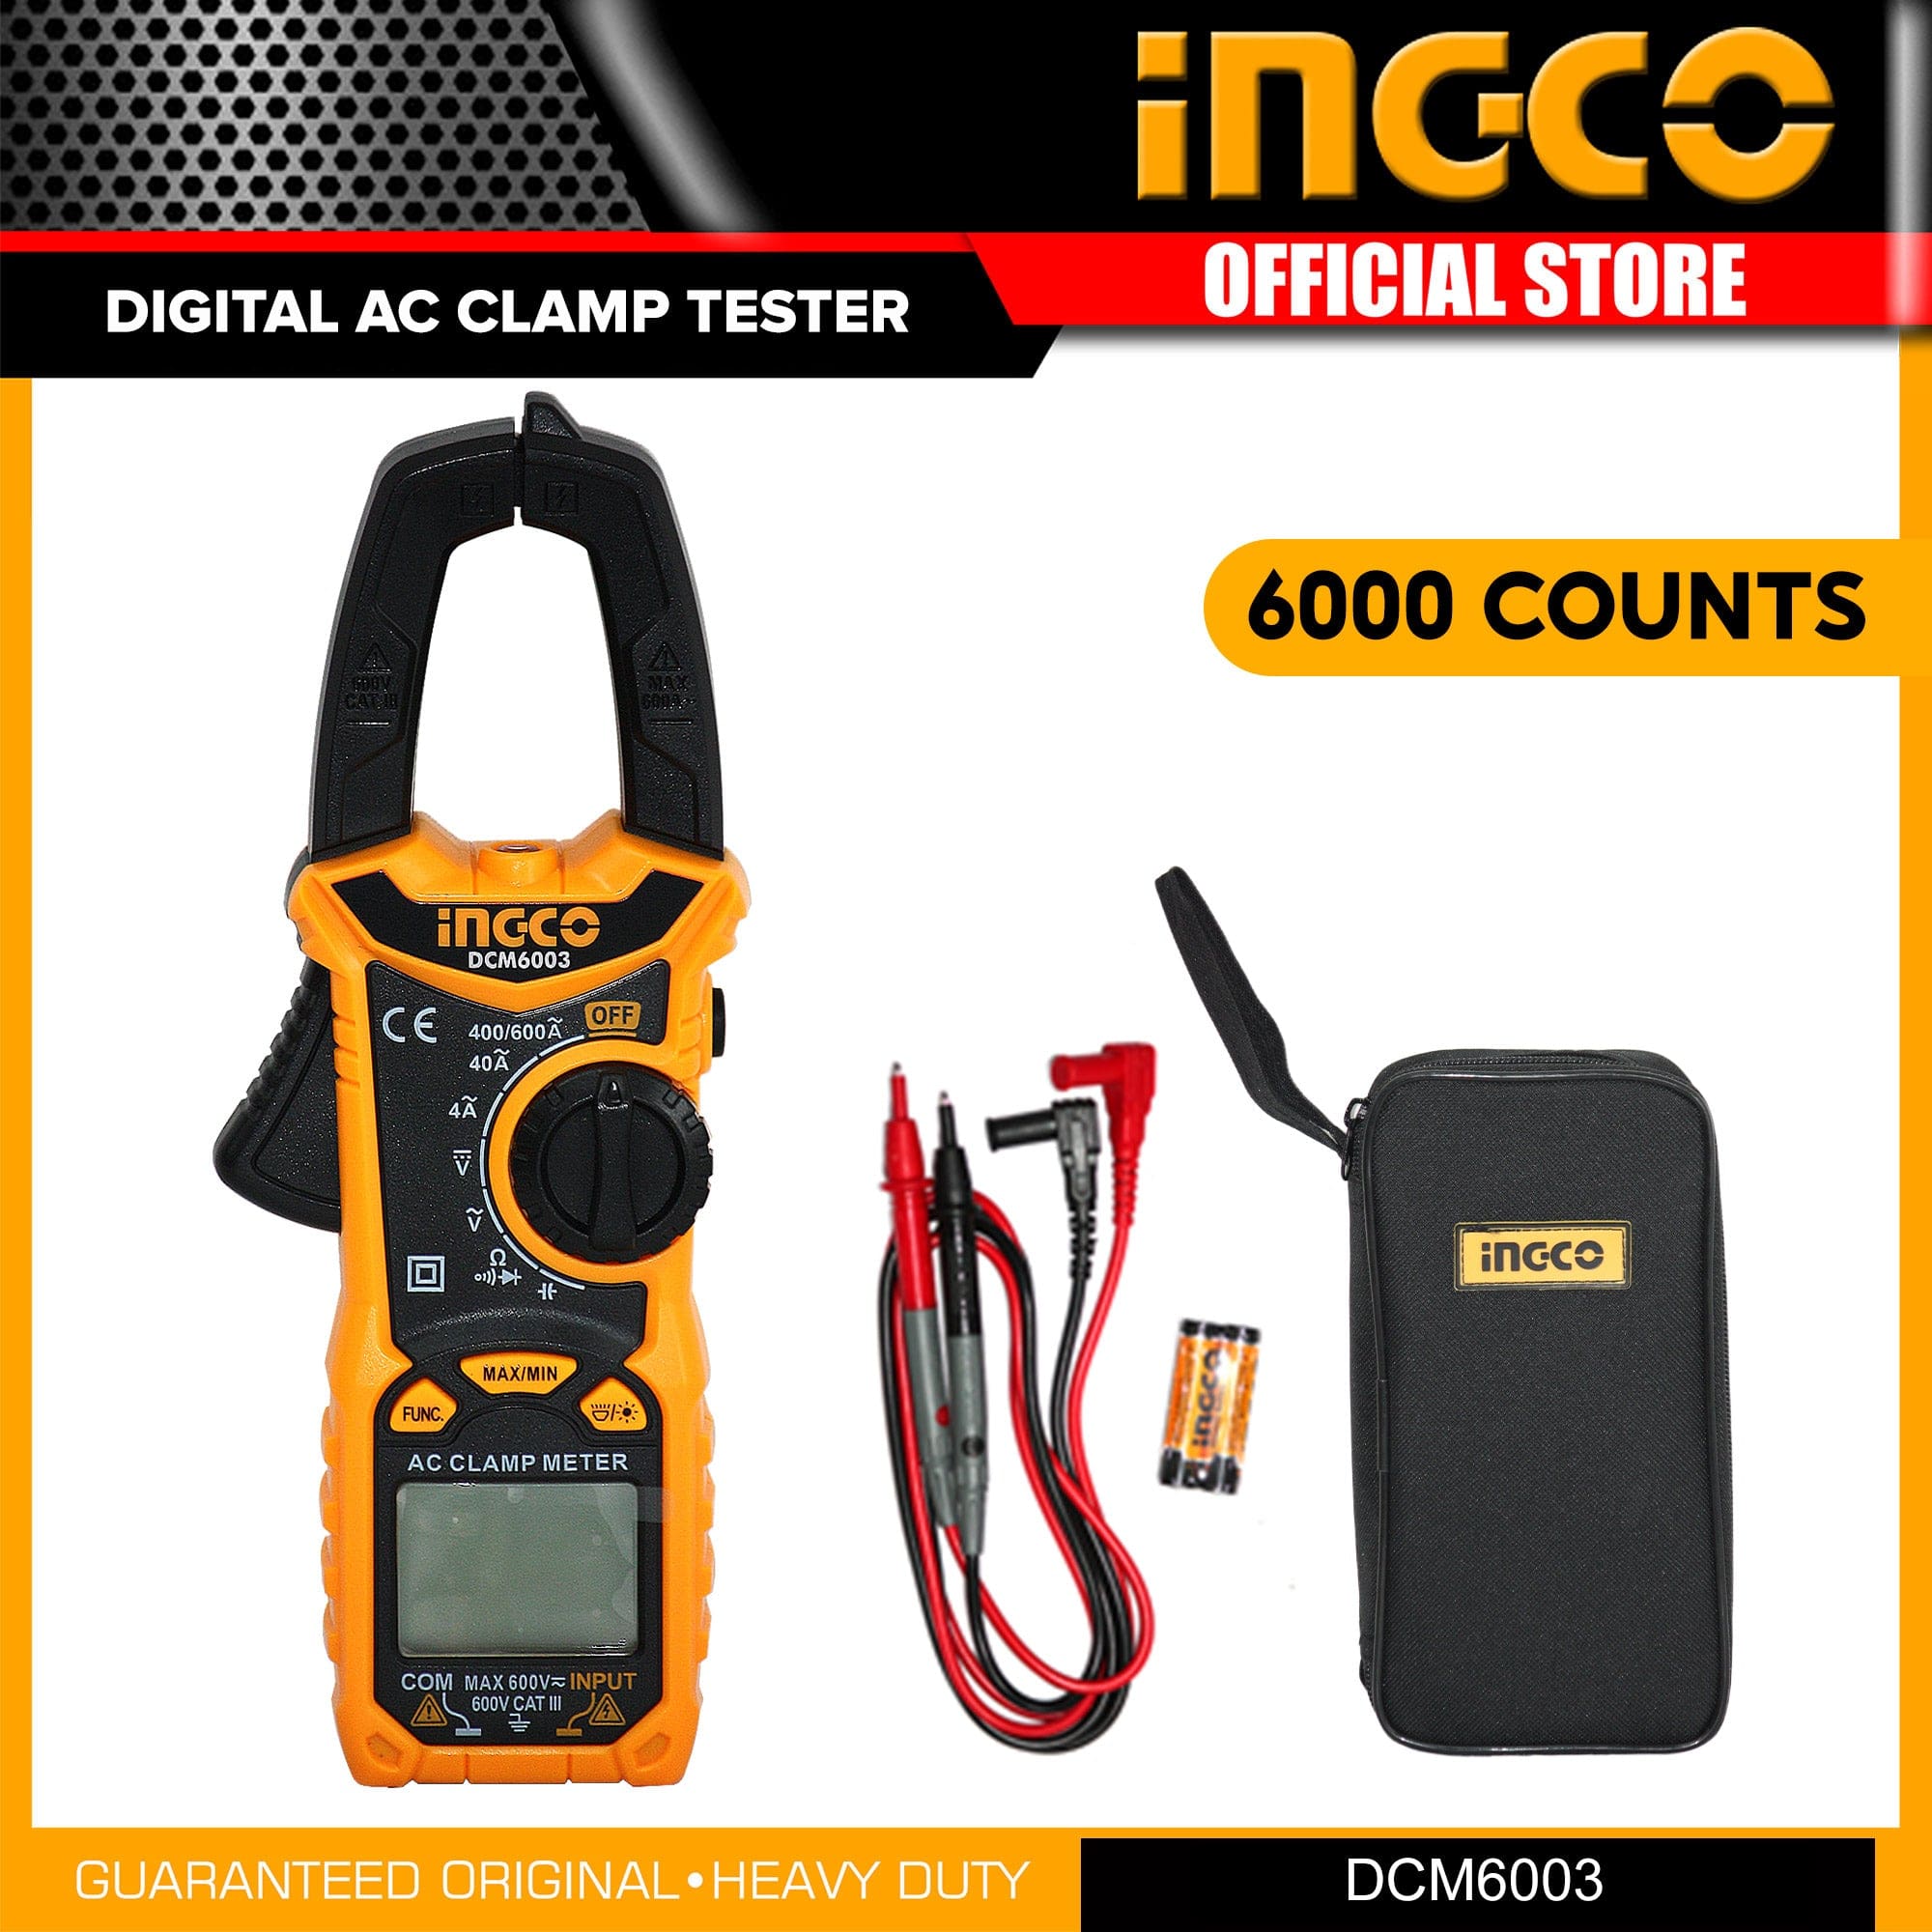 Ingco Digital AC Clamp Meter 6000 counts - DCM6003 - Buy Online in Accra, Ghana at Supply Master Digital Meter Buy Tools hardware Building materials